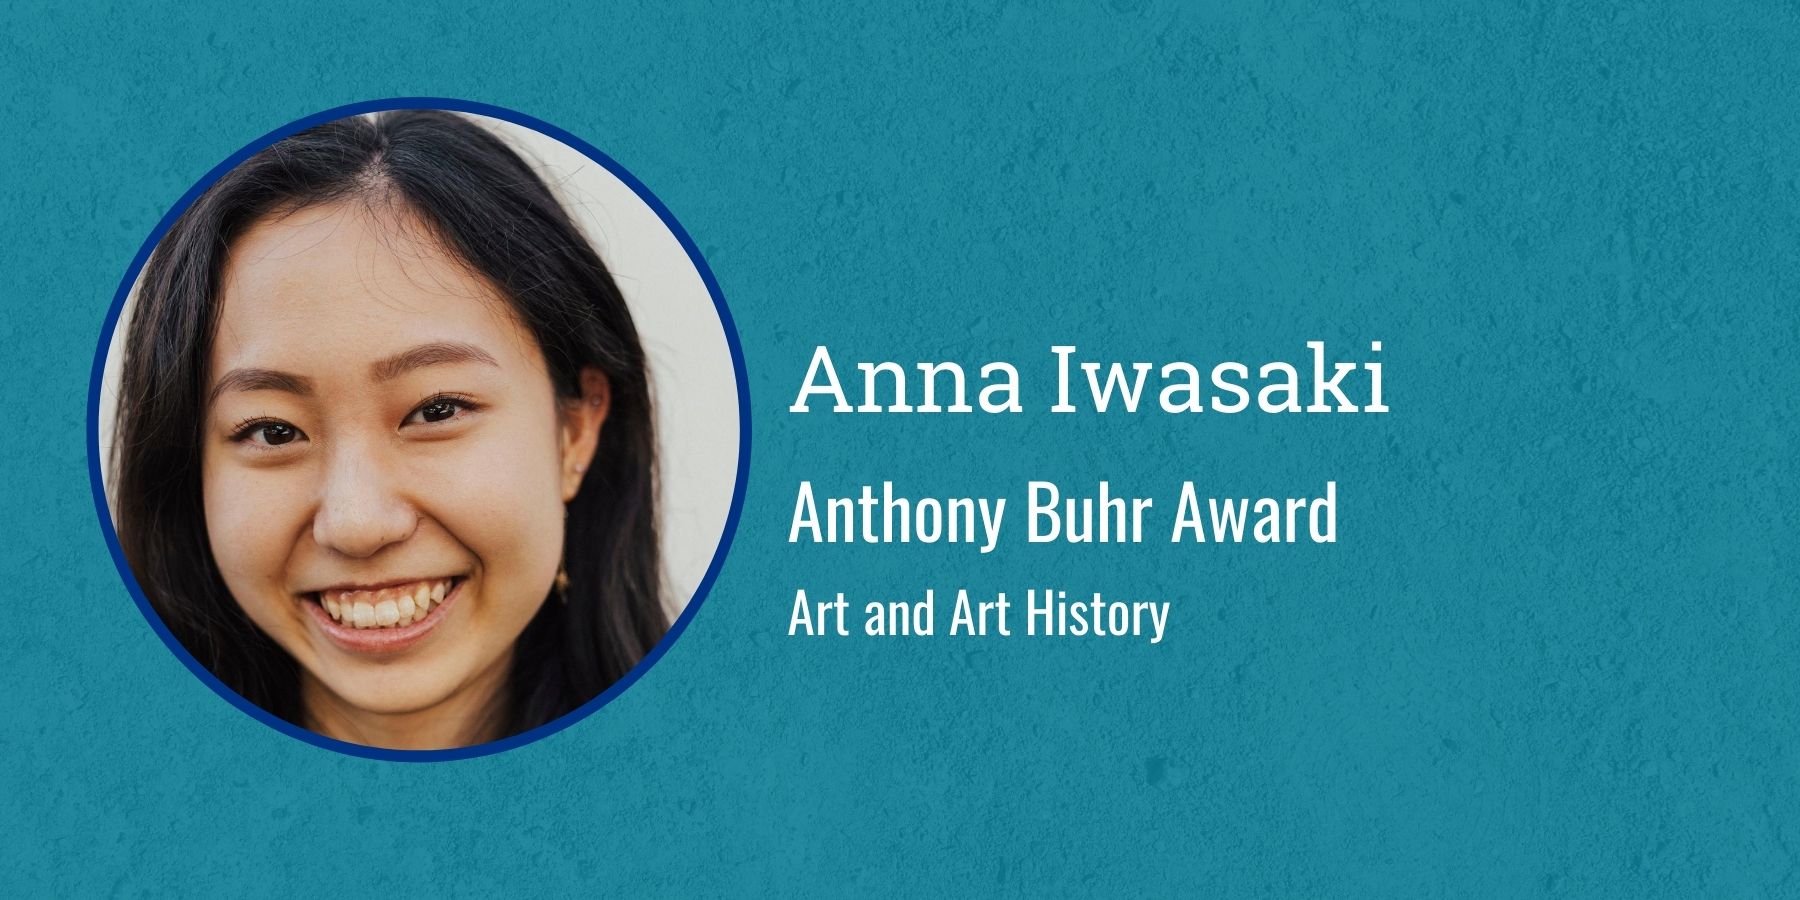 Photo of Anna Iwasaki and text Anthony Buhr Award, Art and Art History